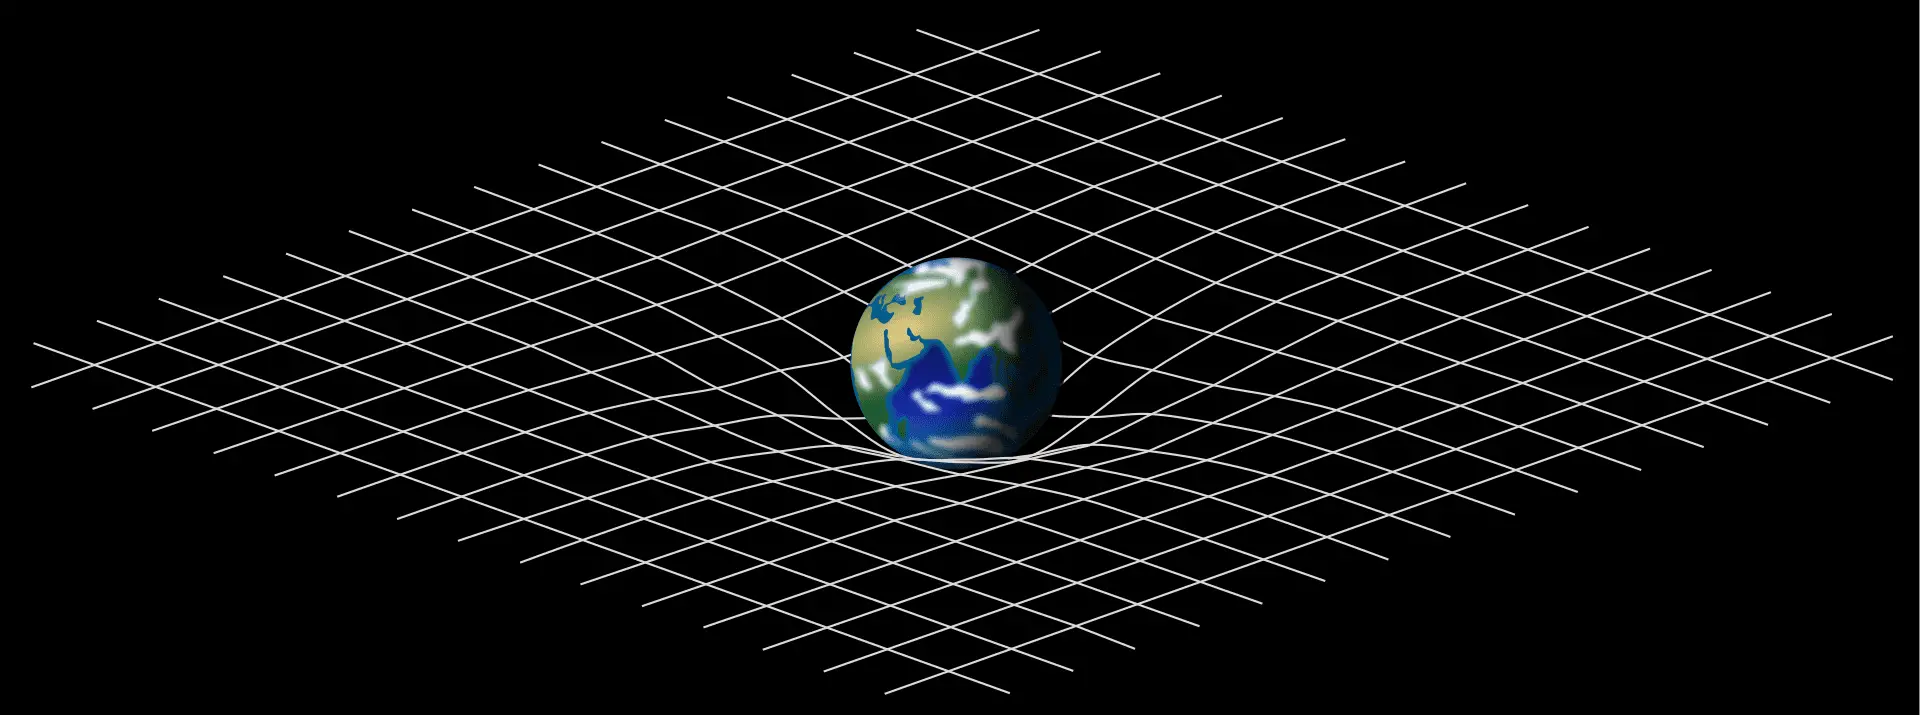 einsteins-space-time-curvature